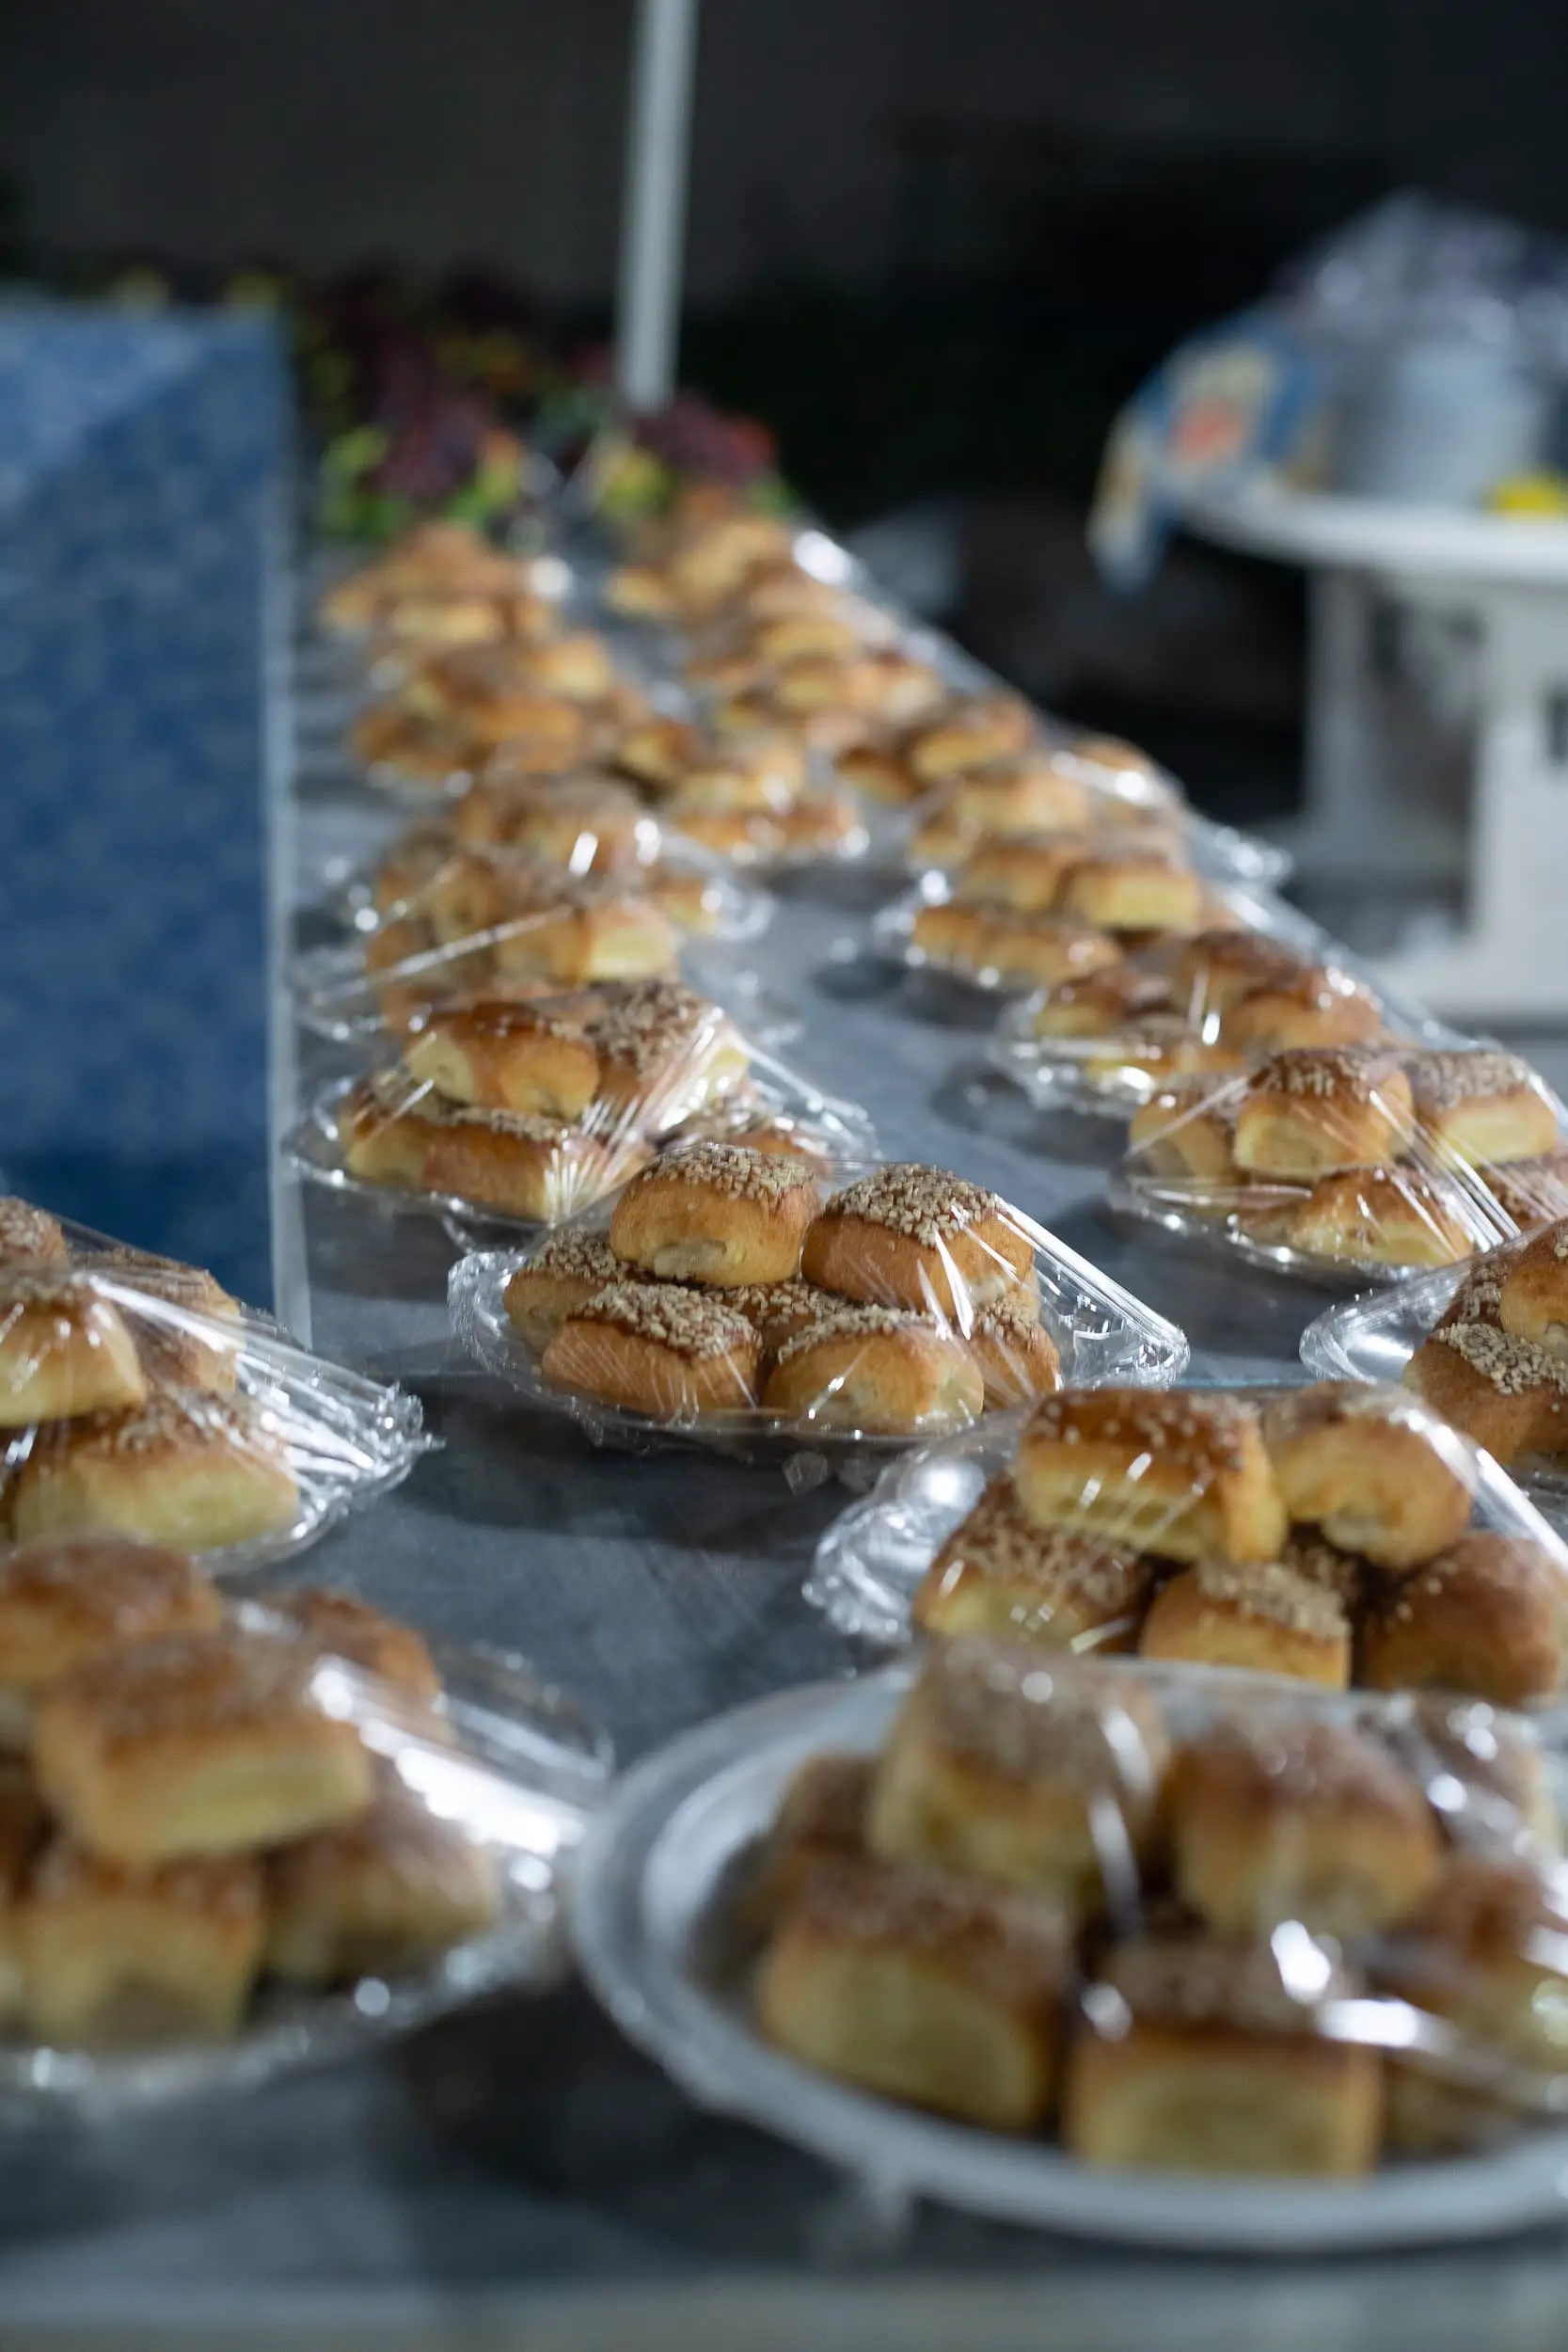 Iranian pastries